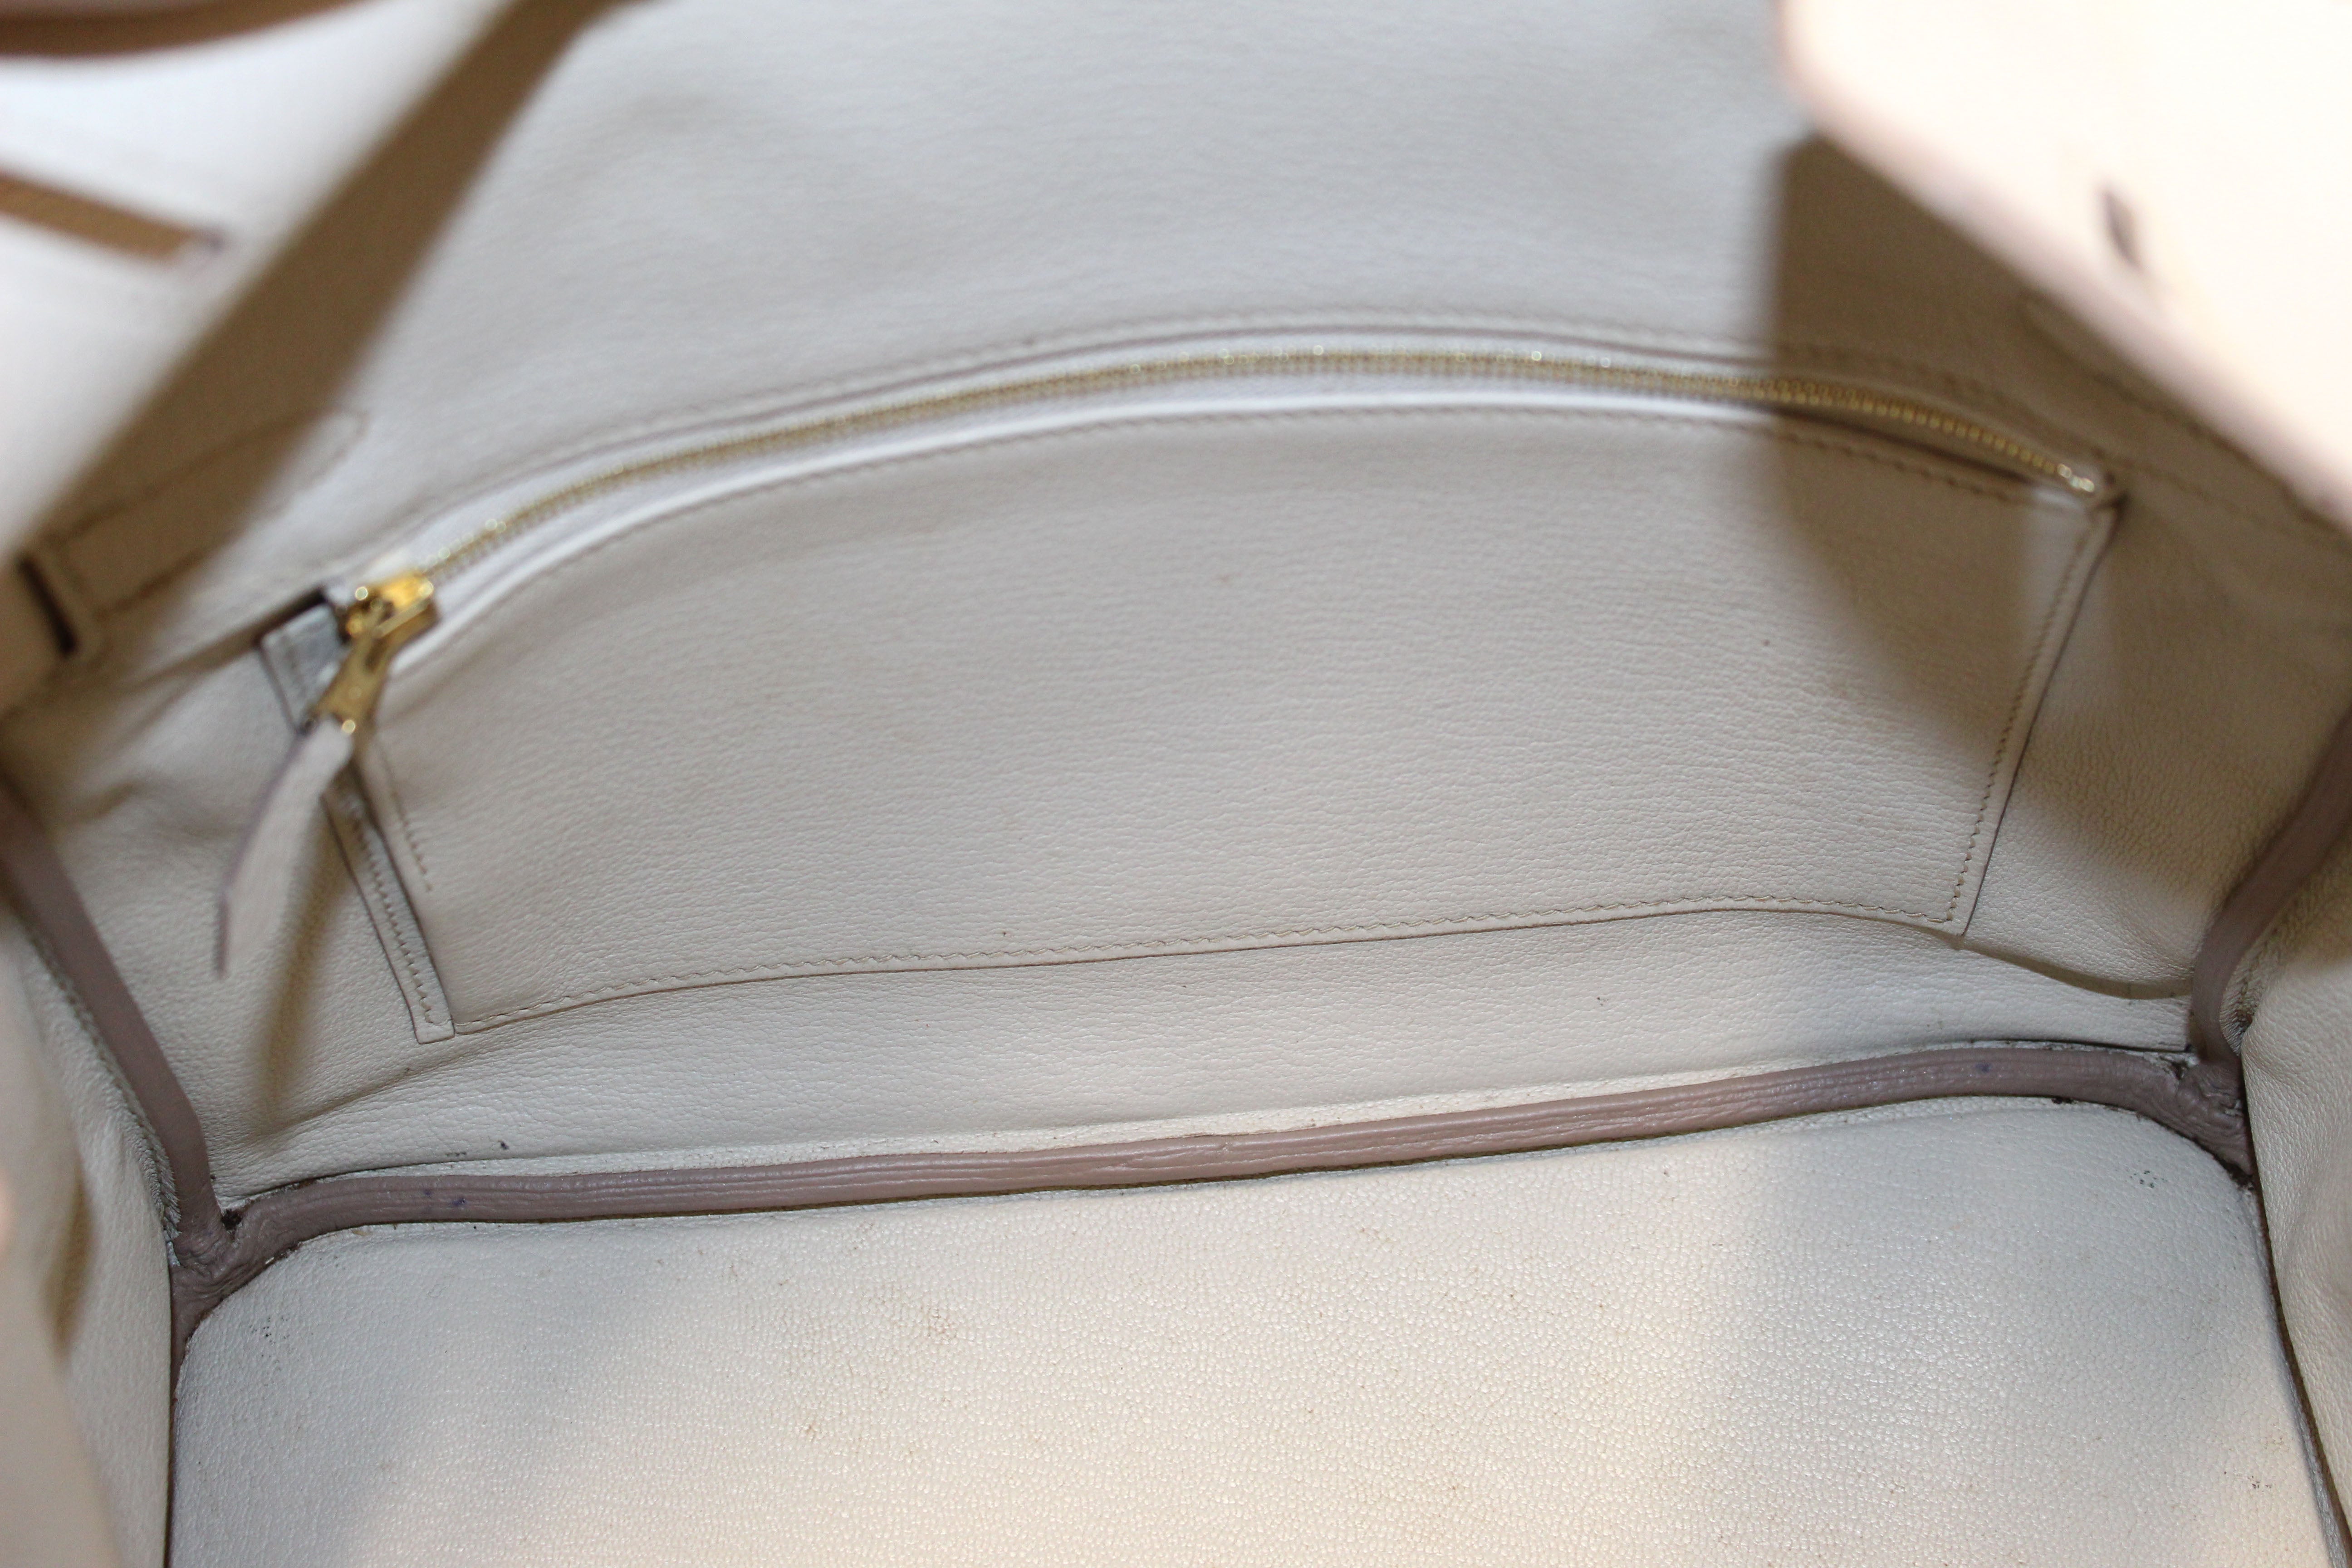 Authentic Hermes Gris Perle Togo Leather Birkin 30 Handbag